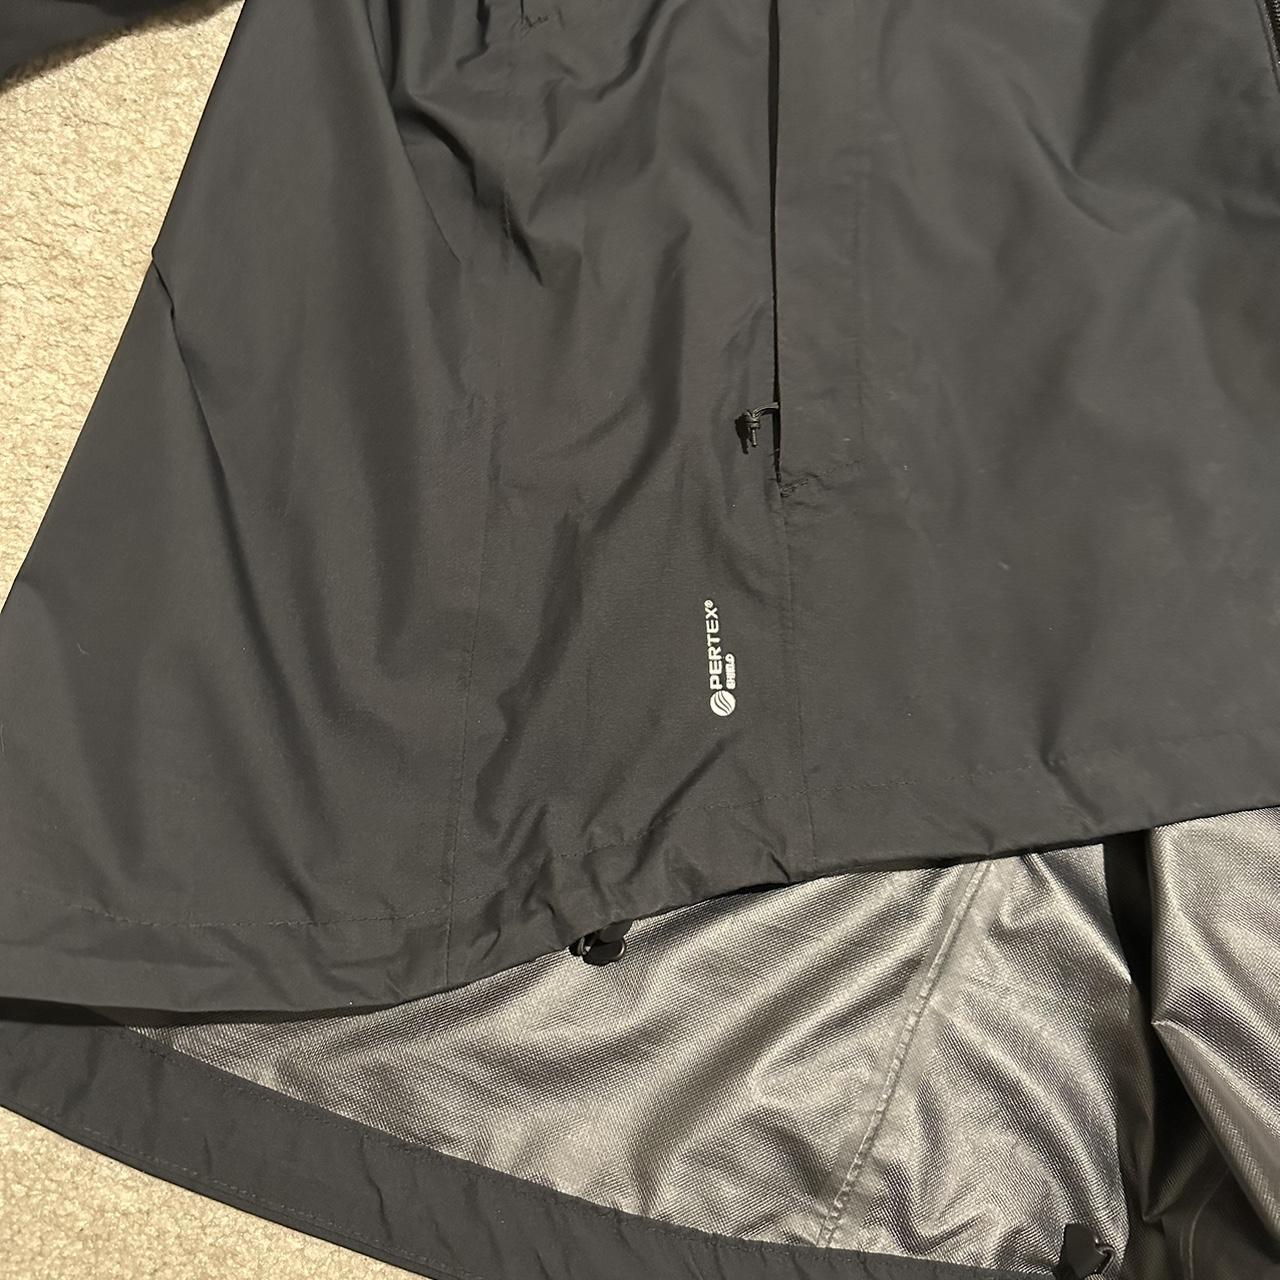 RAB Downpour eco jacket - black 9/10 condition... - Depop